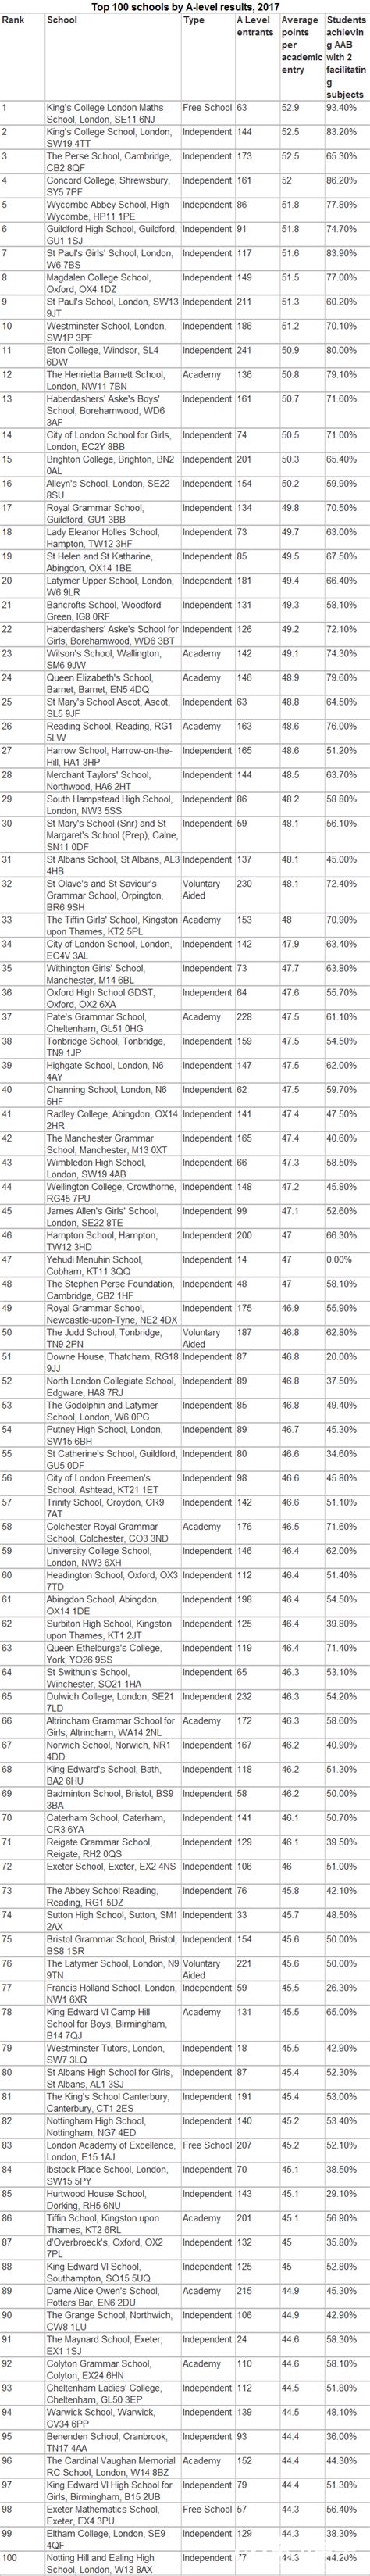 A-level成绩TOP100院校排名，伦敦大学国王学院数学学校位居榜首！_锦秋A-Level官网